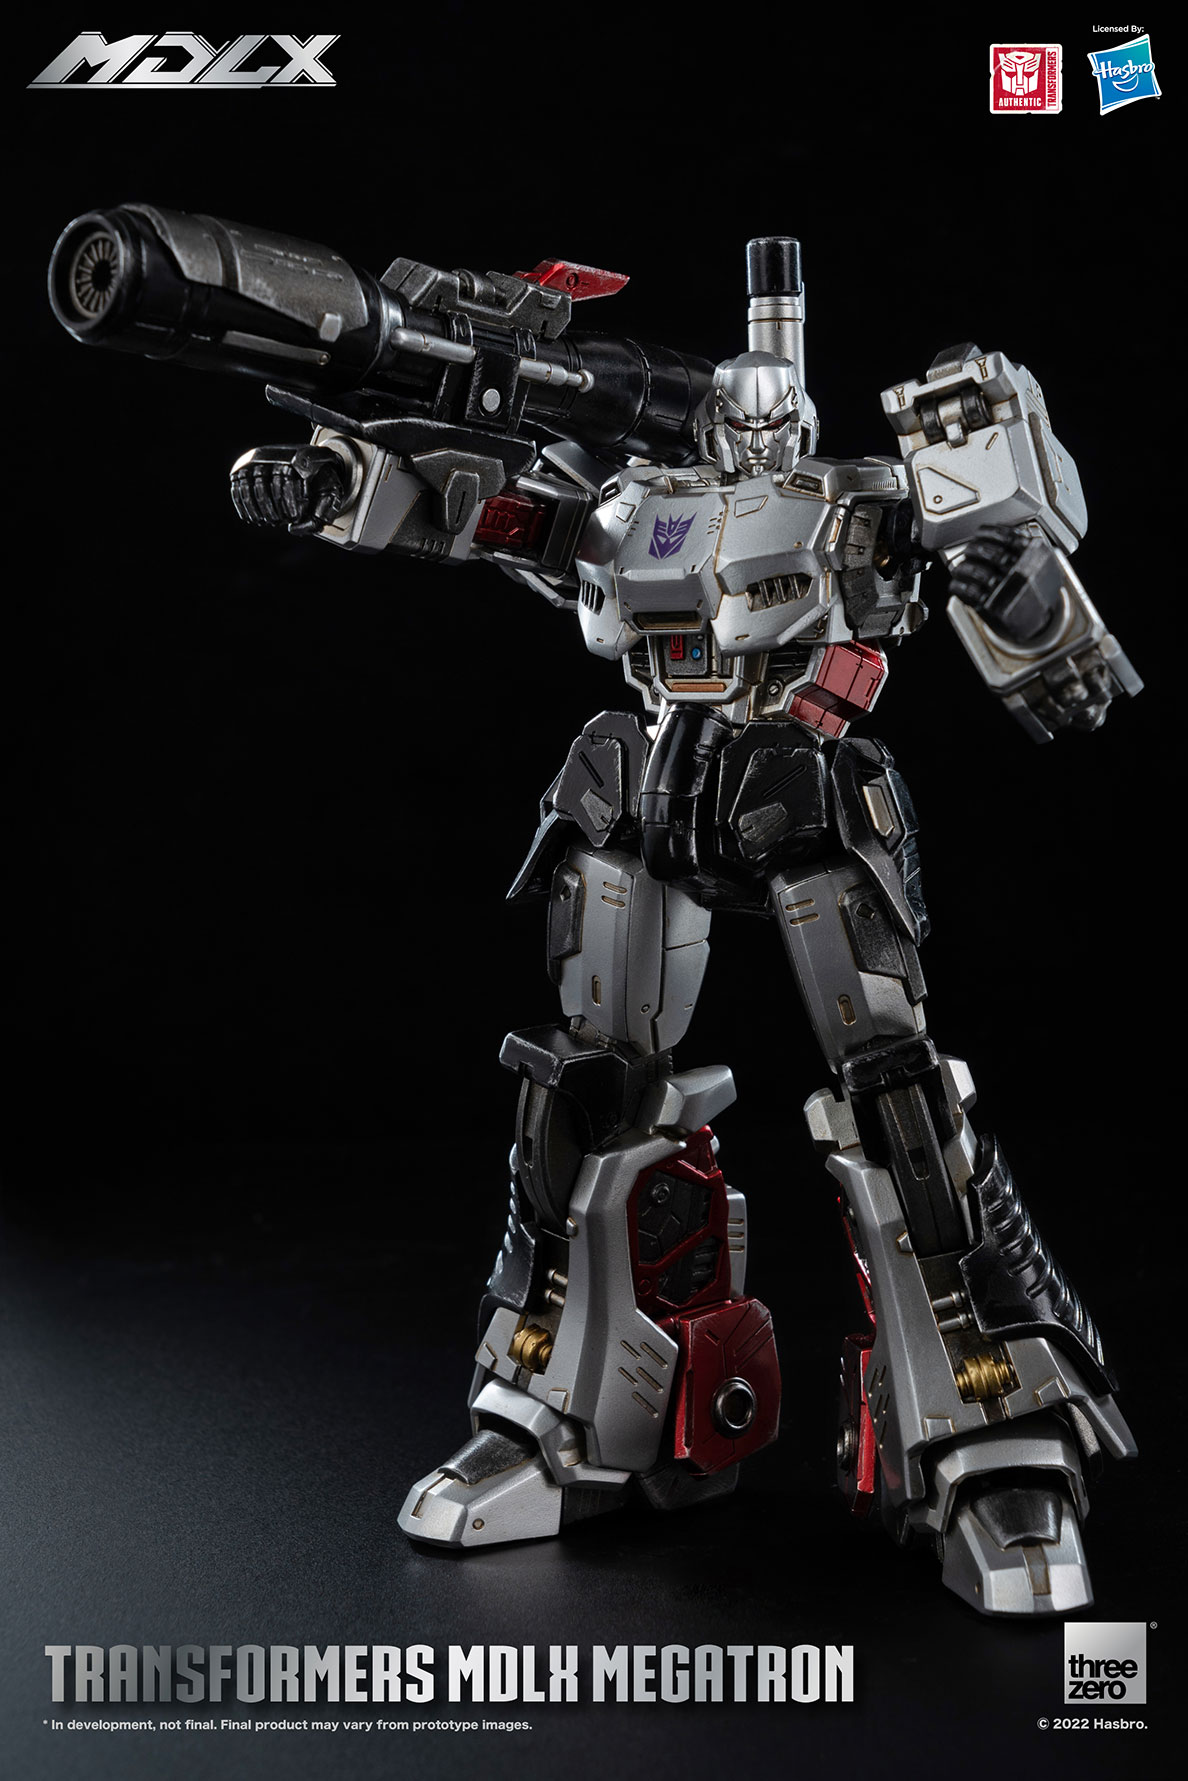 Transformers, MDLX Megatron